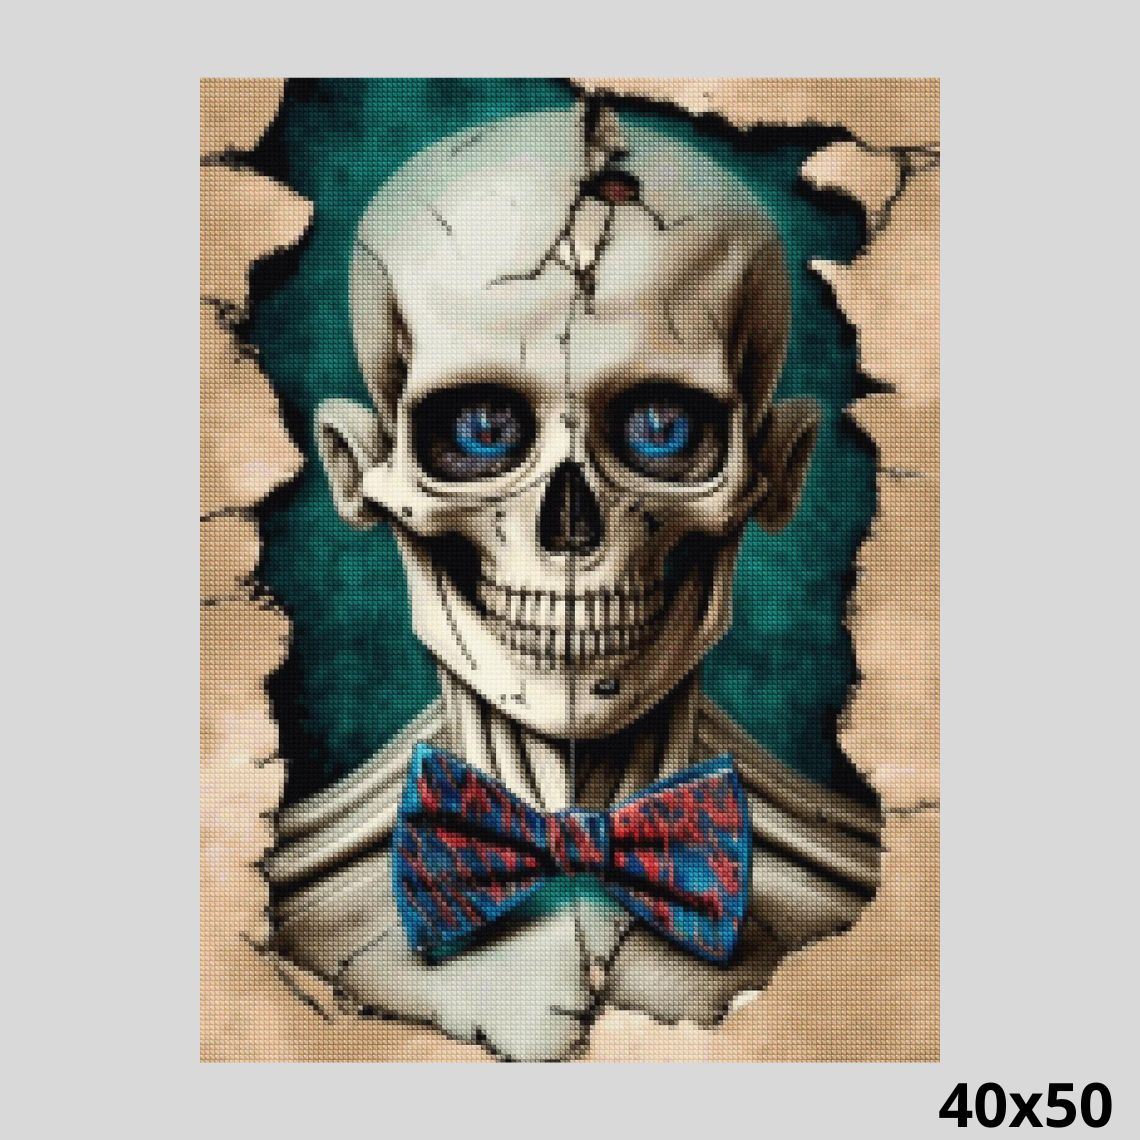 Grinning Cheerful Skull 40x50 - Diamond Painting